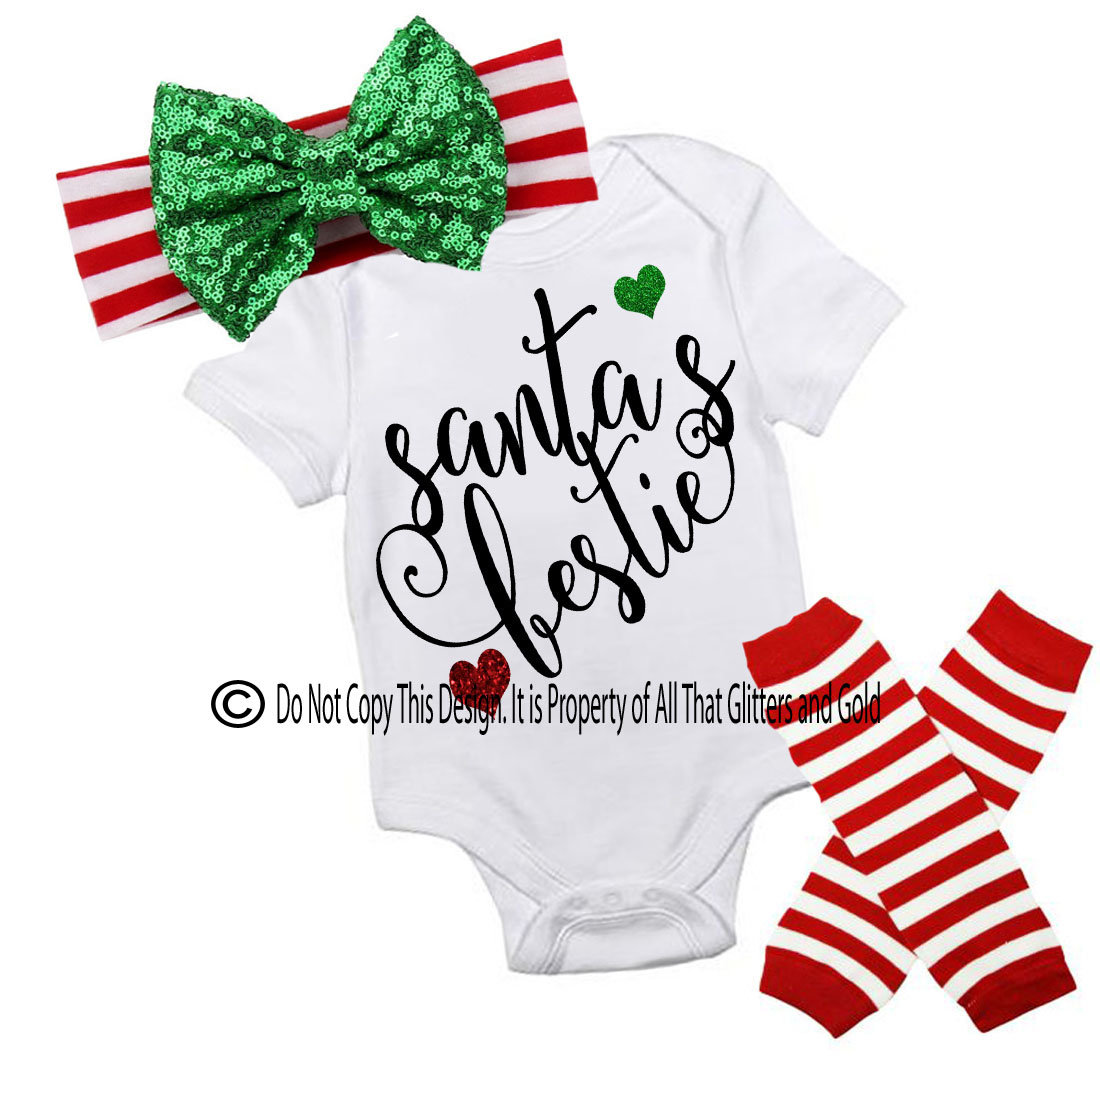 Glitter Santa's Bestie Handmade Christmas Outfit For Baby Girls and Little Girls